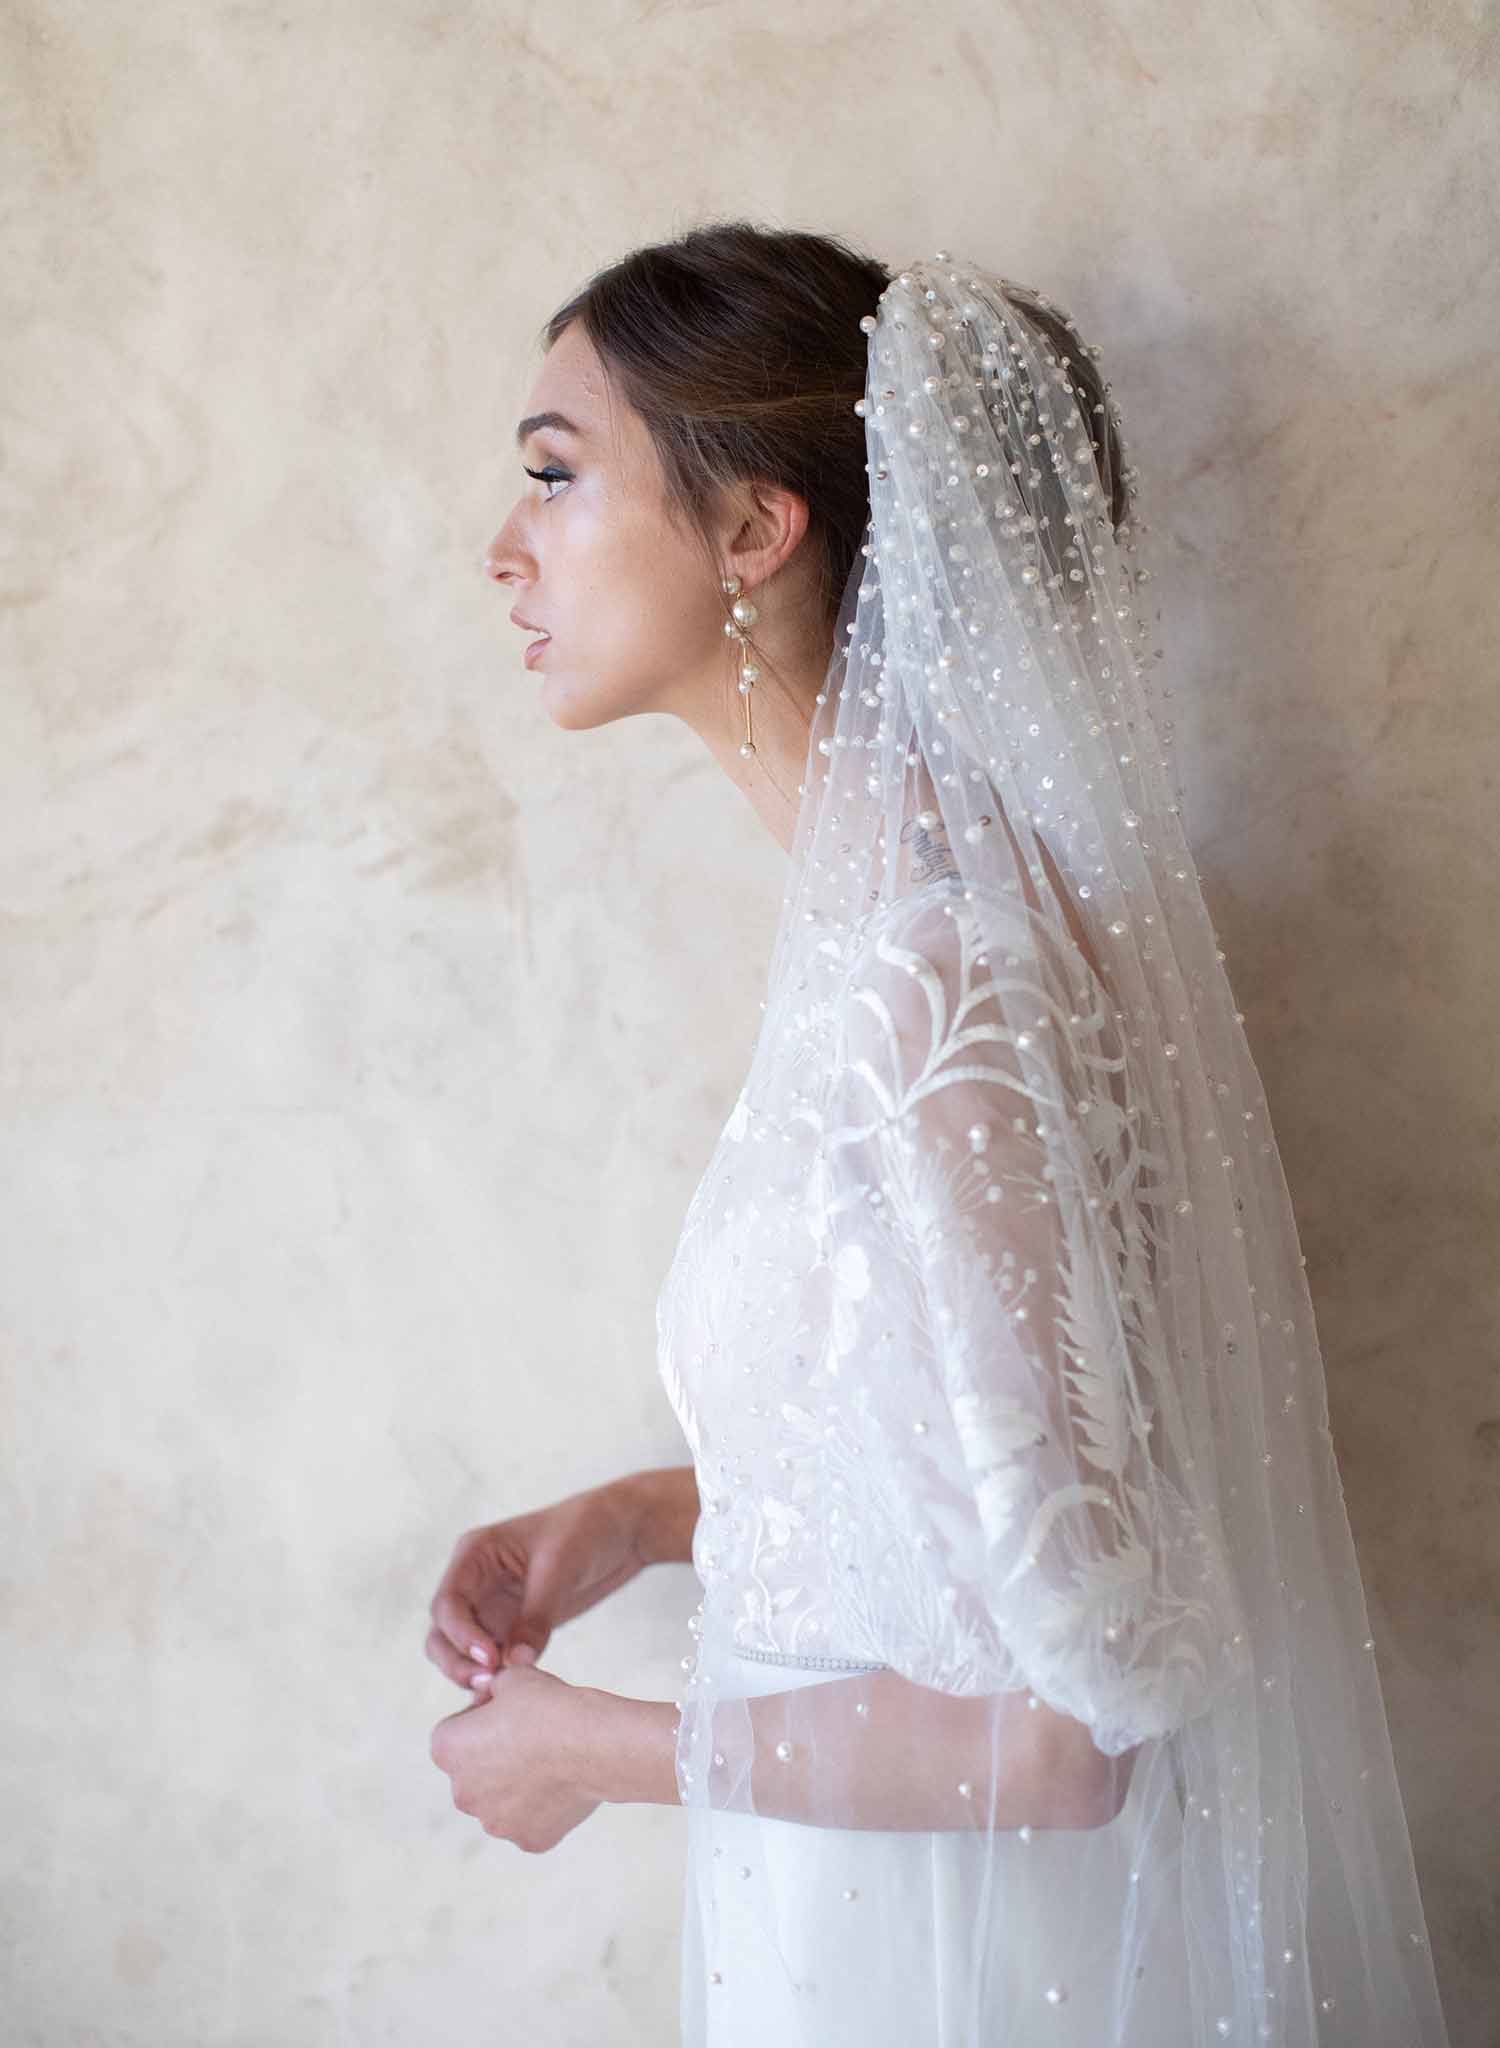 Pearl bridal veil, wedding veil - Pearl showers bridal train veil